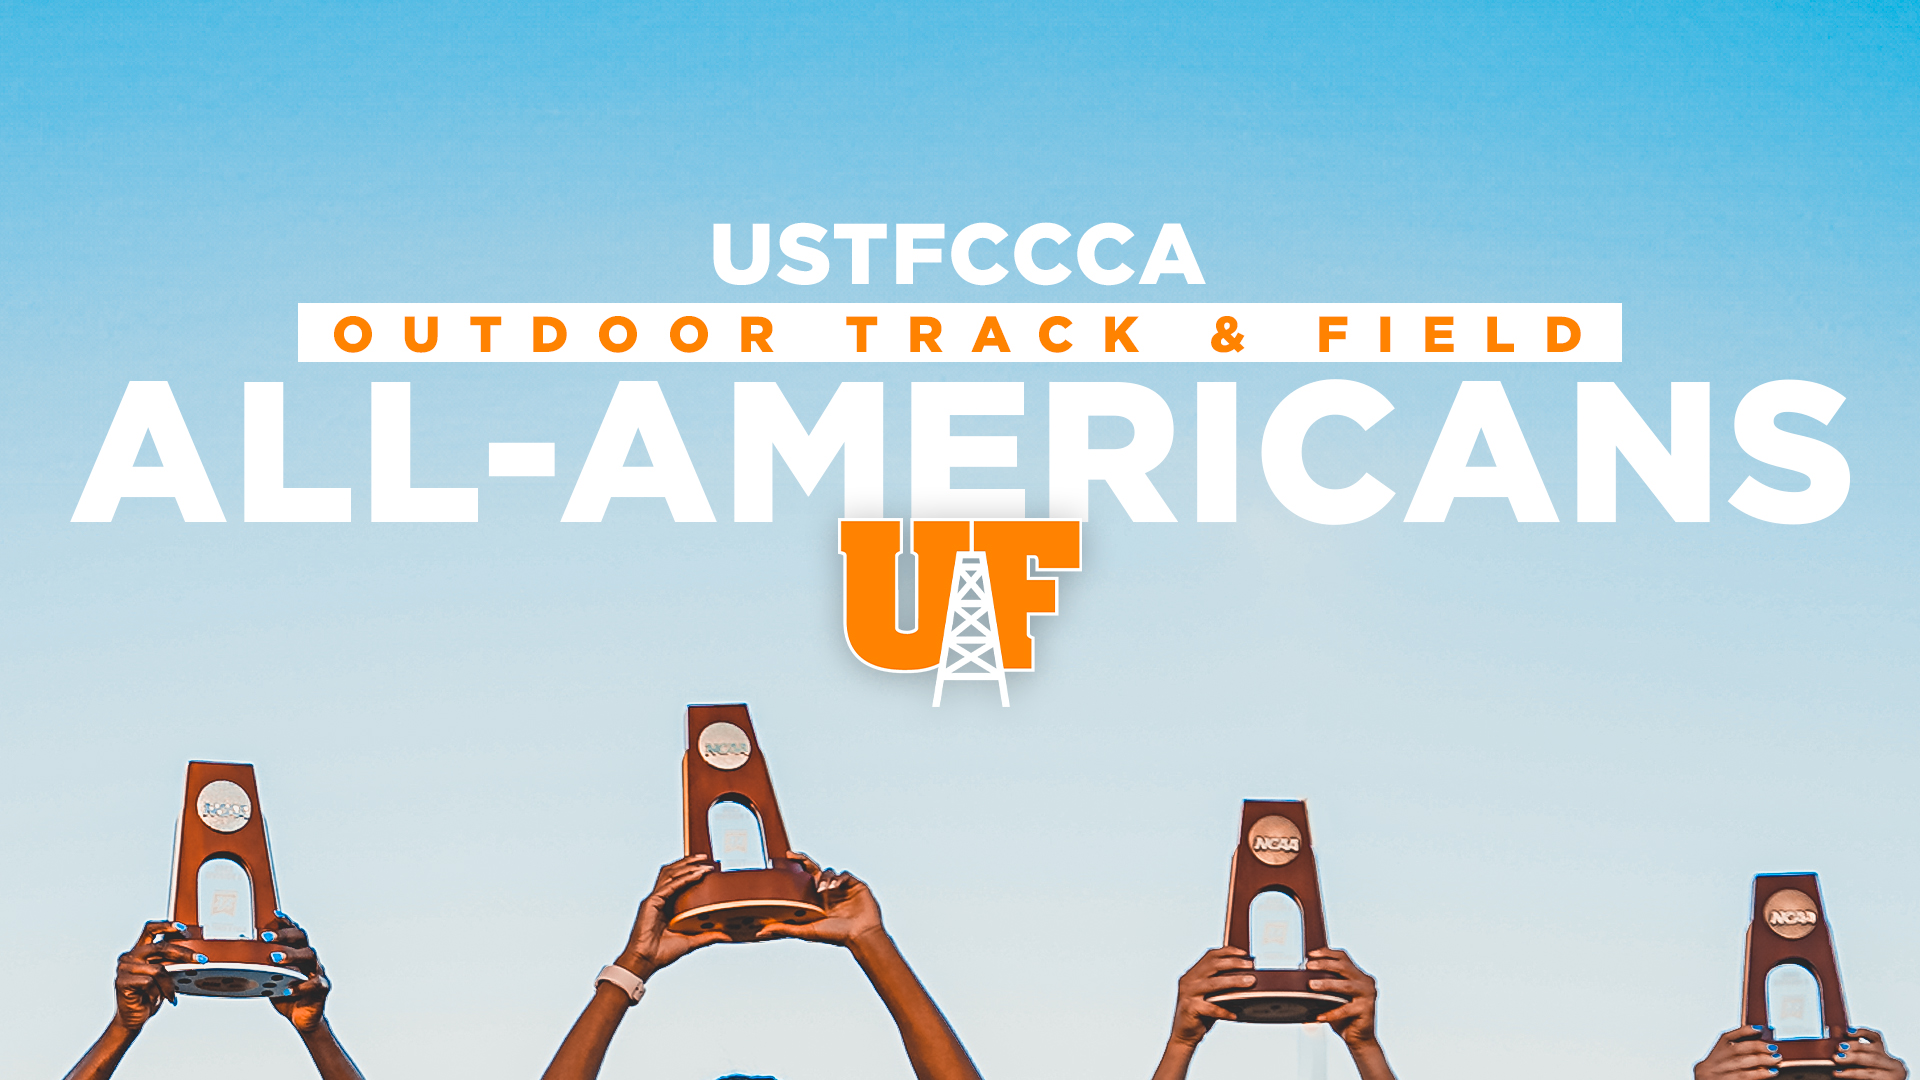 USTFCCCA Announces Final All-American List